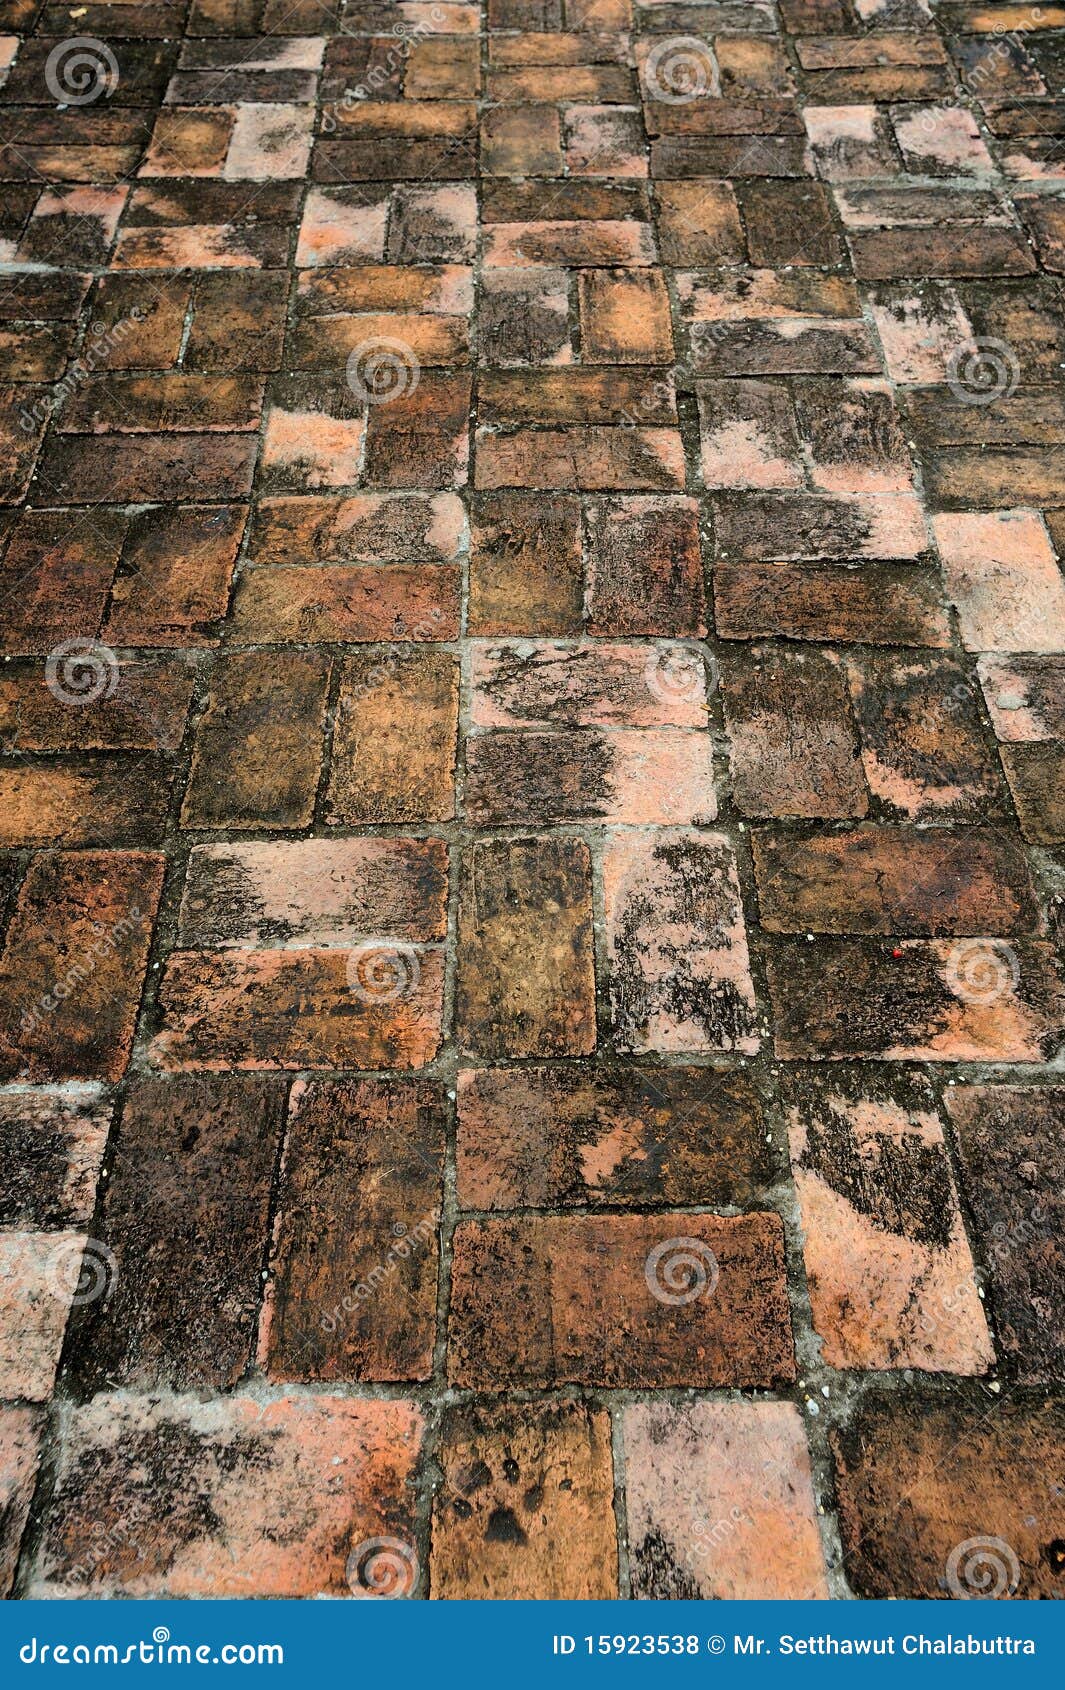 Brick block pavement stock photo. Image of block, outdoors - 15923538